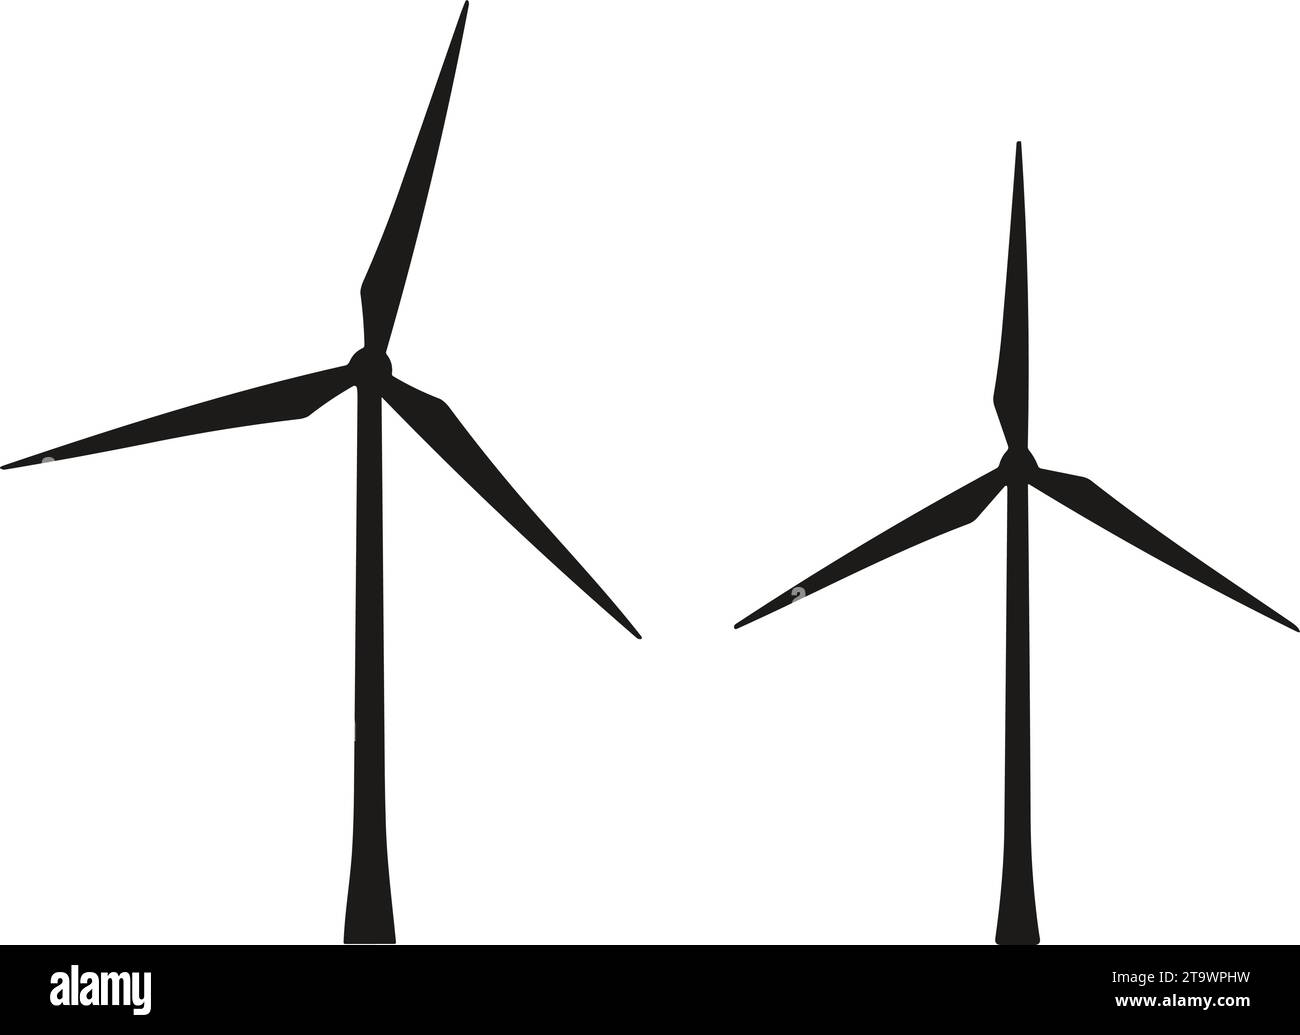 Wind turbine vector silhouette set. Windmill vector icons. Wind turbine icons. Wind power icons. Alternative energy symbols. Renewable power generatio Stock Vector